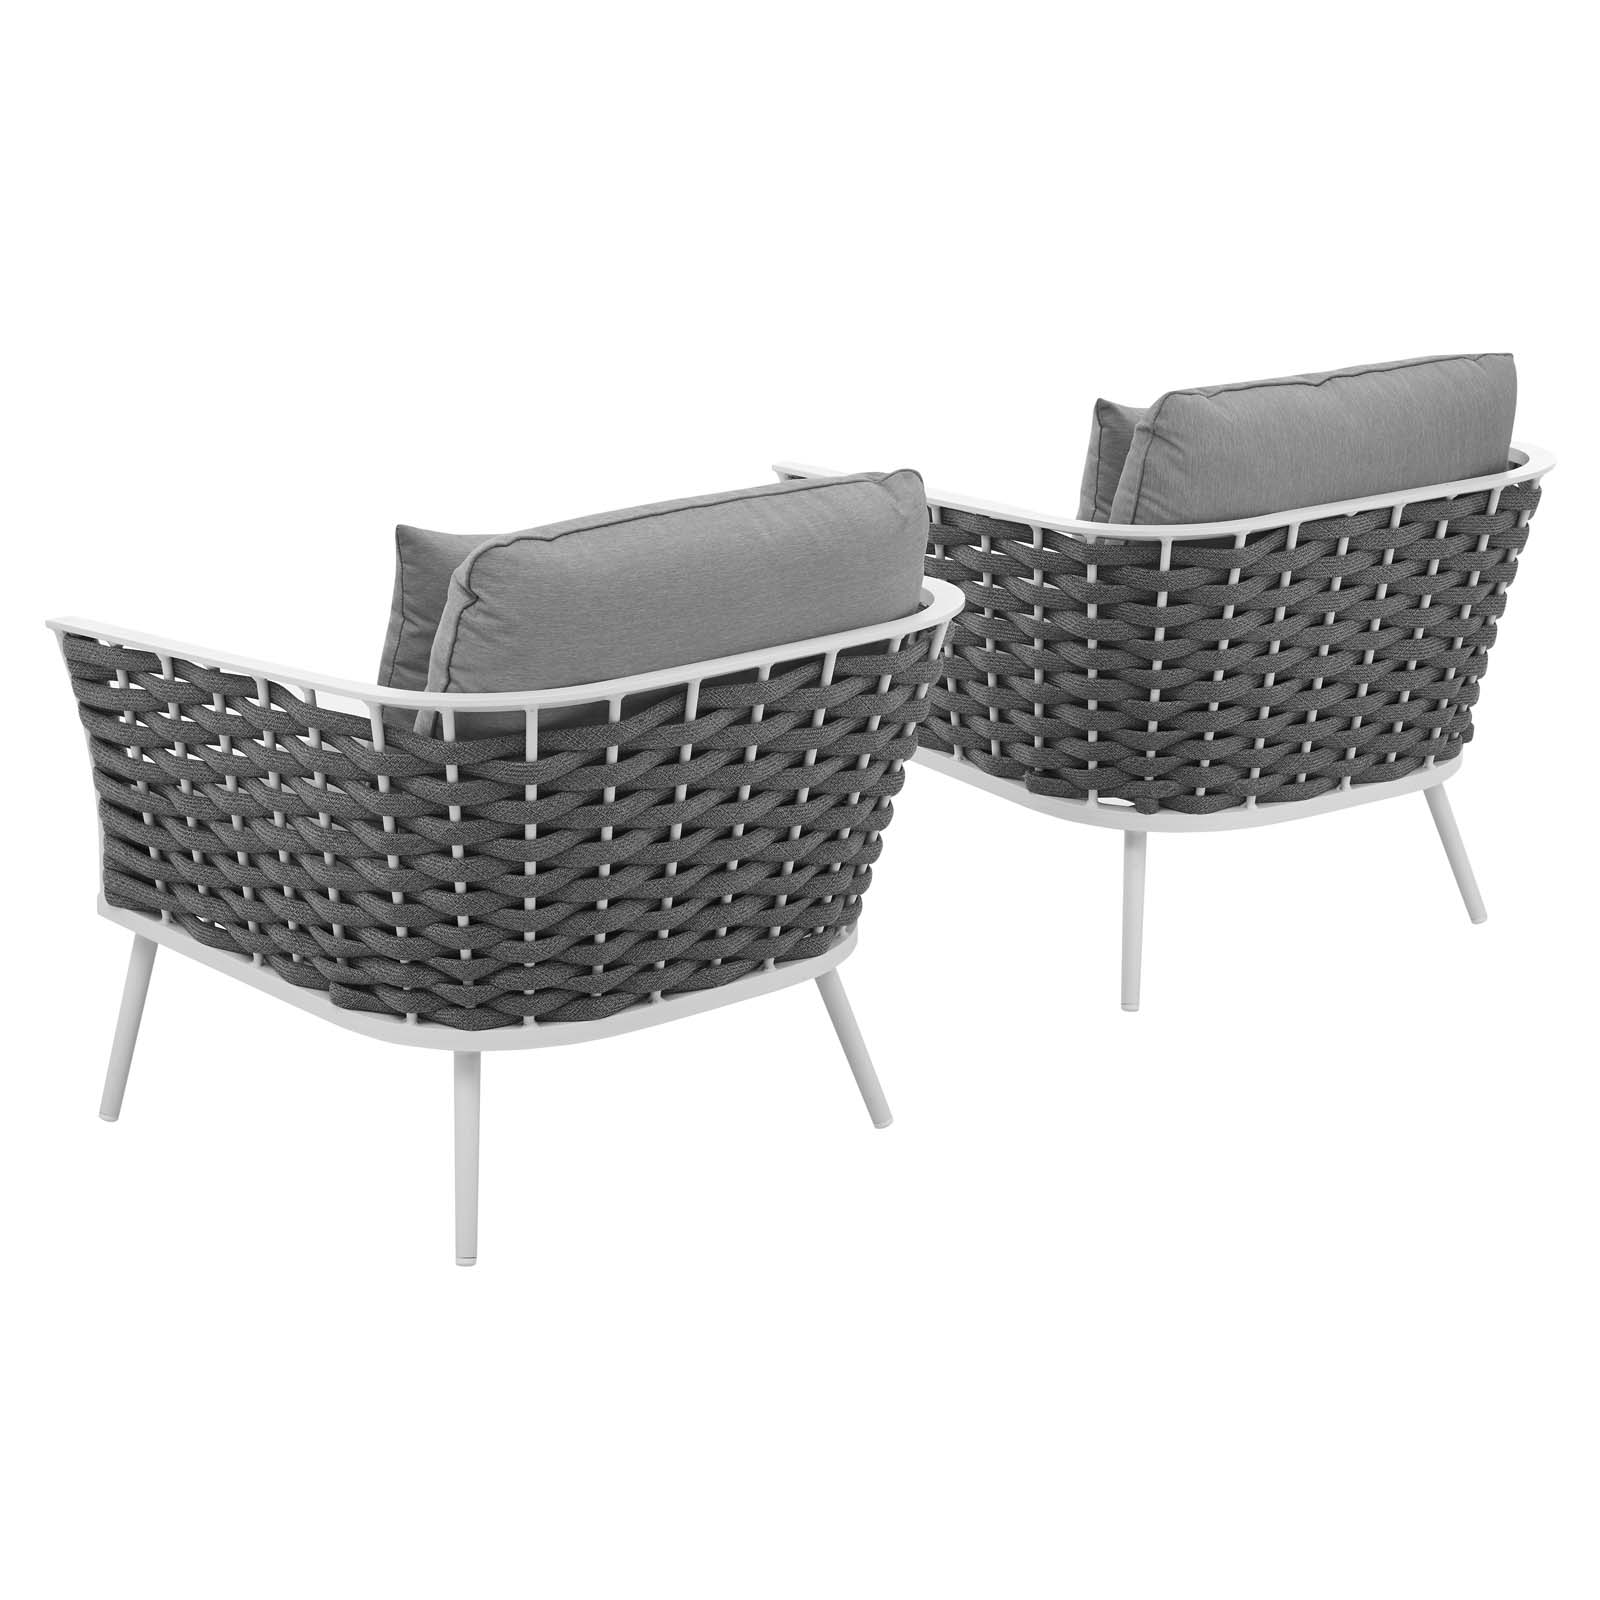 Modern Contemporary Urban Outdoor Patio Balcony Garden Furniture Lounge Chair Armchair, Set of Two, Fabric Aluminium, White Grey Gray - image 3 of 6